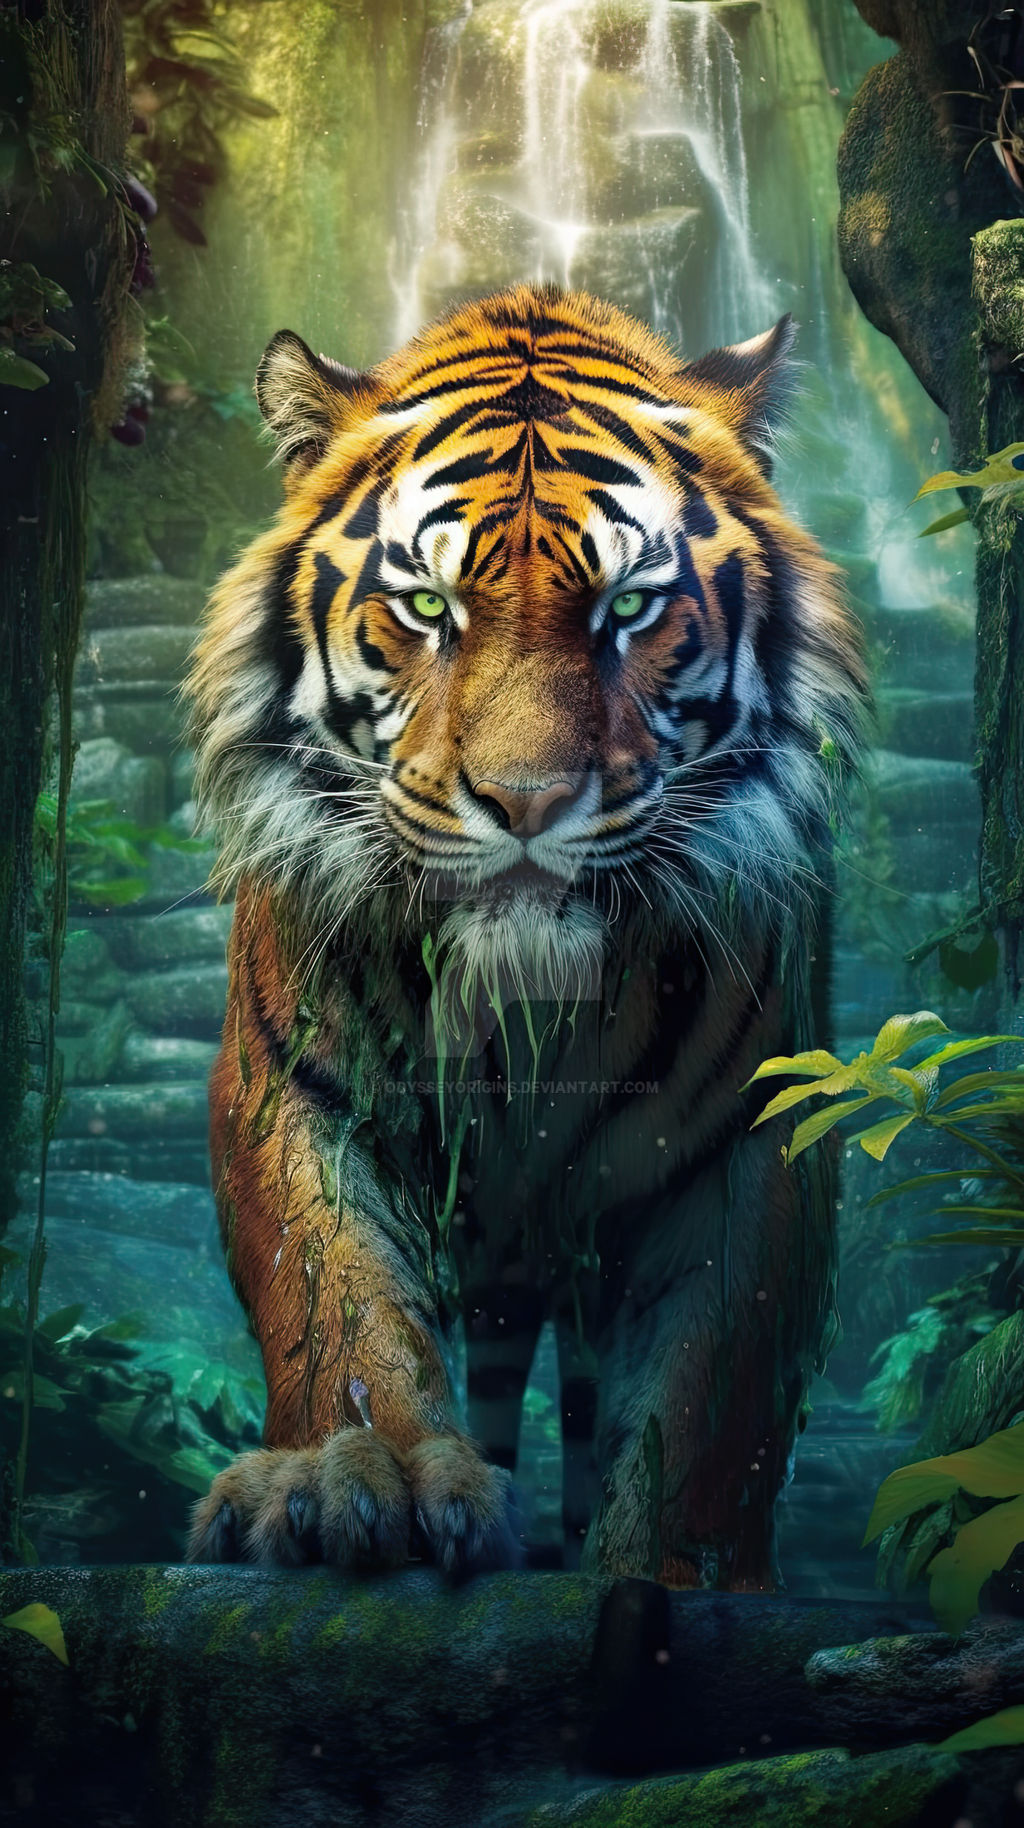 The Majestic Roar: Ultra-High Definition Tiger Art by OdysseyOrigins on ...